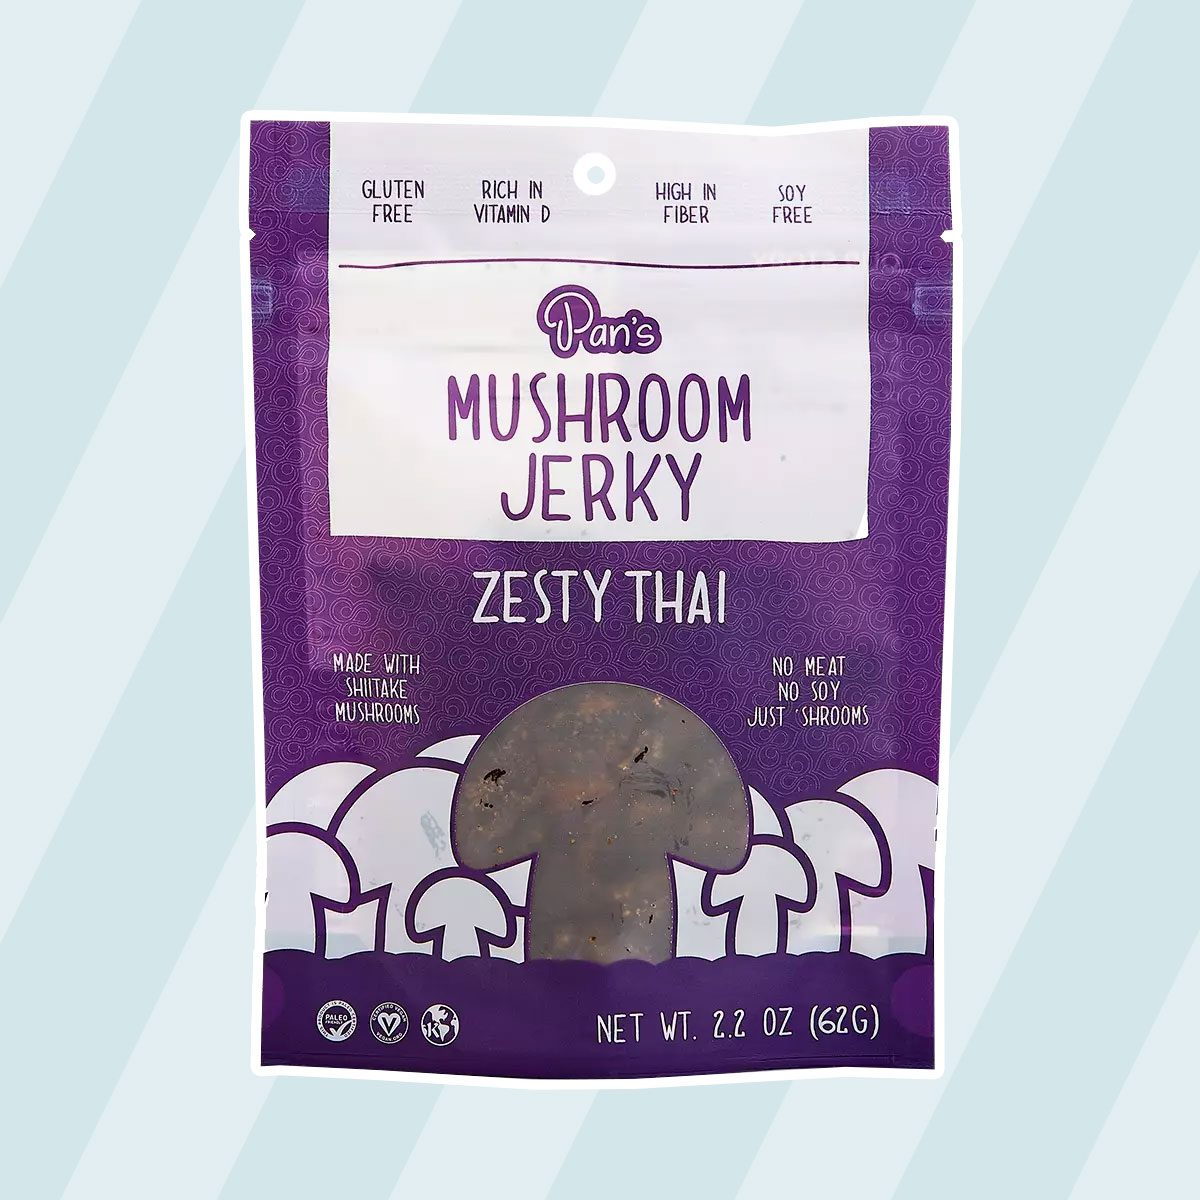 Zesty Thai Mushroom Jerky